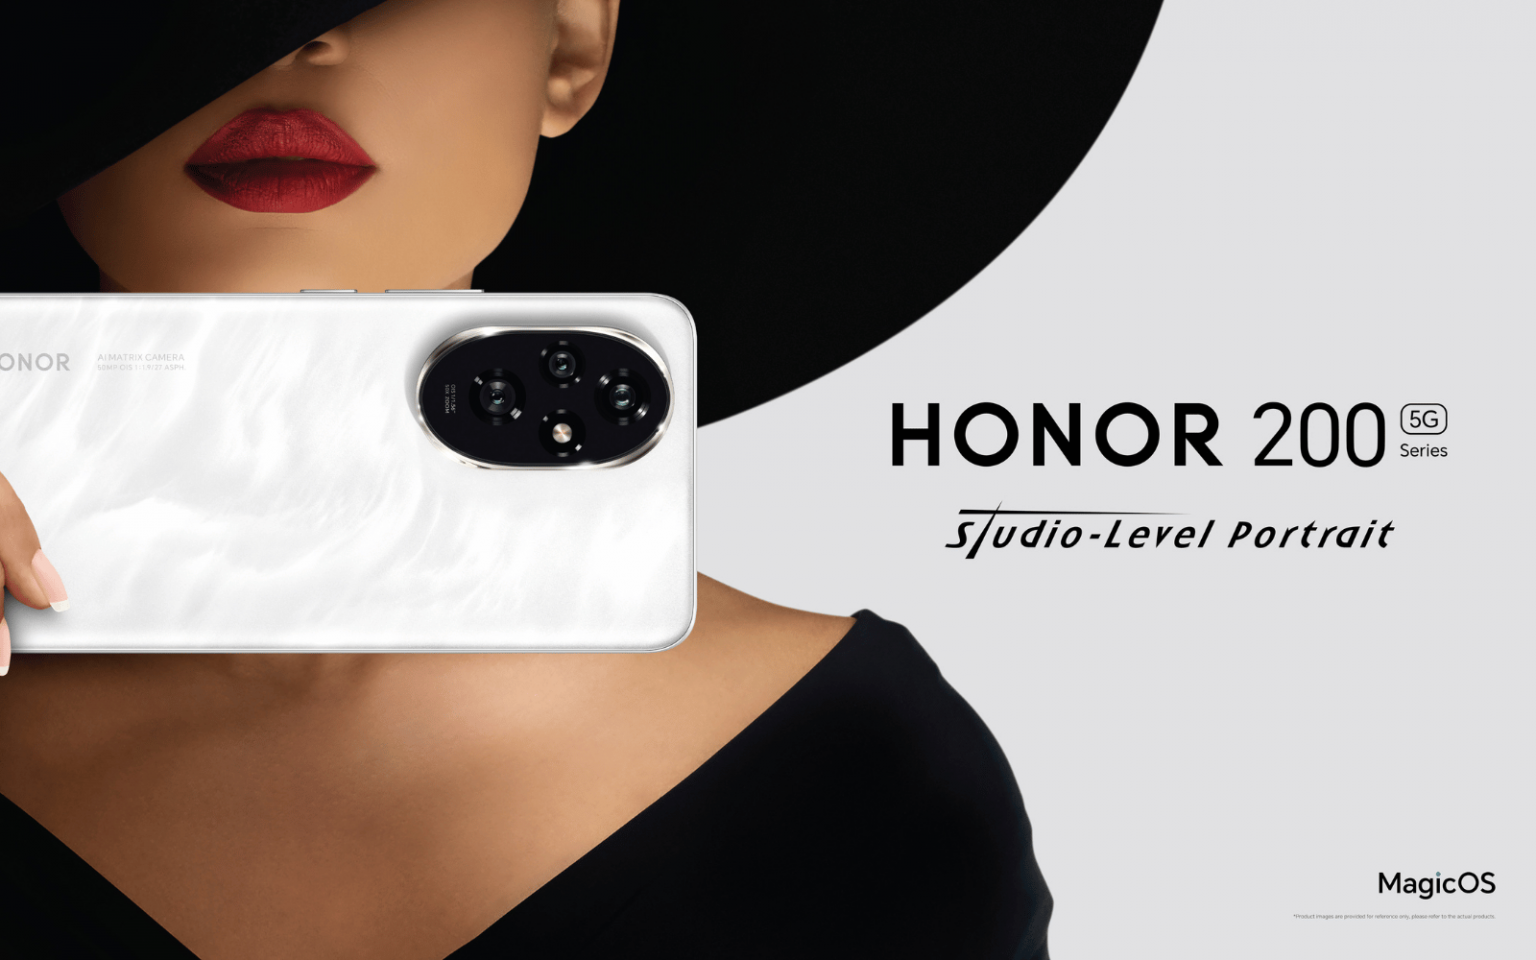 Honor 200 series offers studio-quality portraits